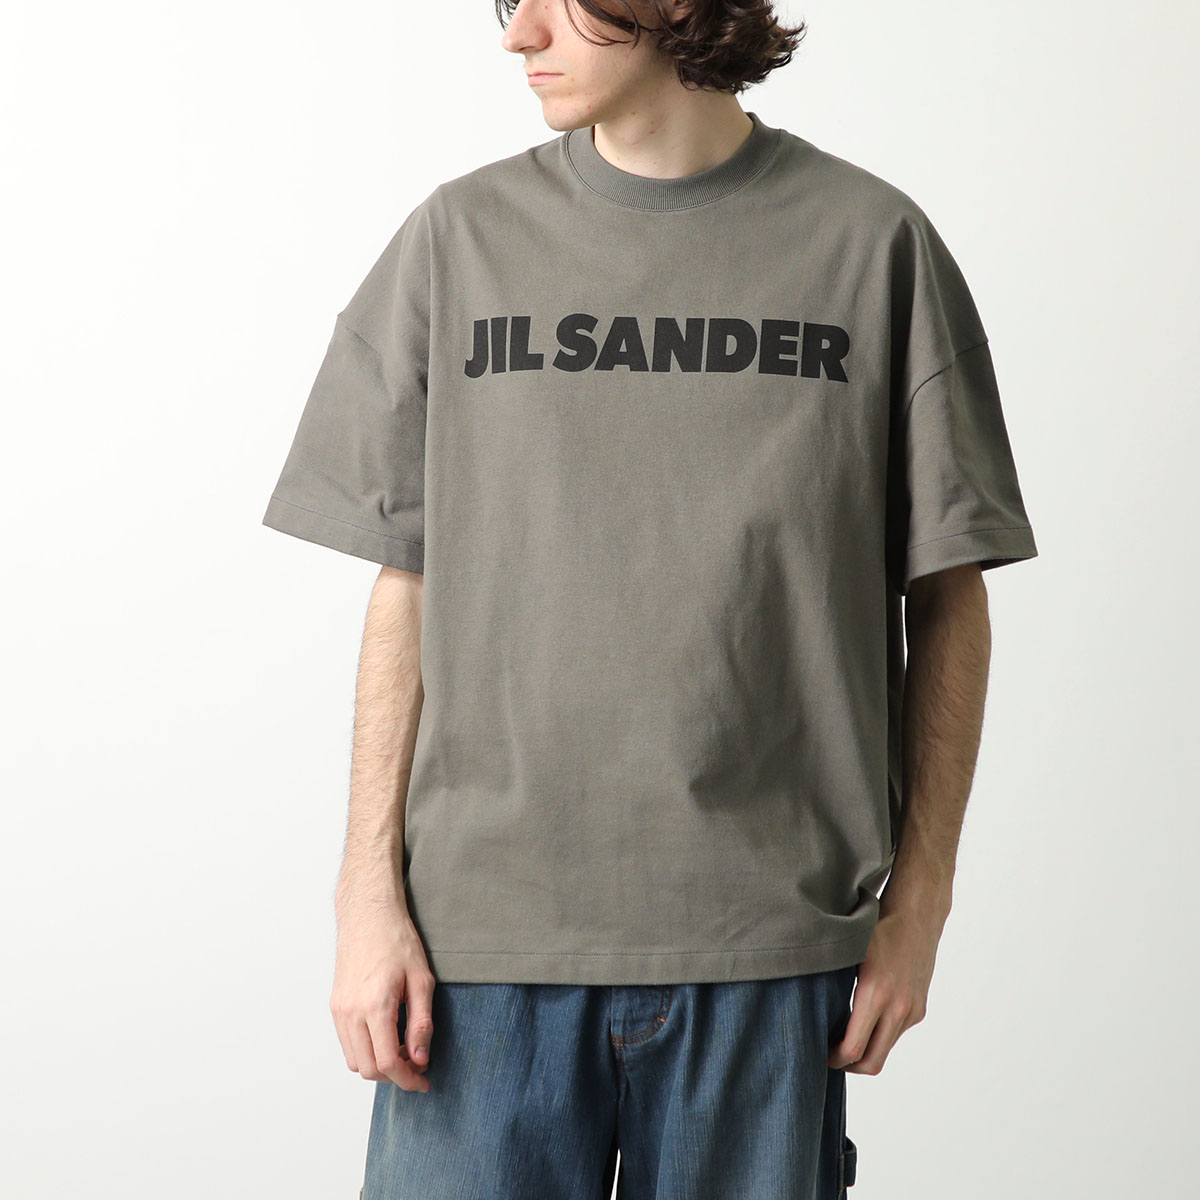 JIL SANDER ジルサンダー Tシャツ J21GC0001 J20215 メンズ 半袖 